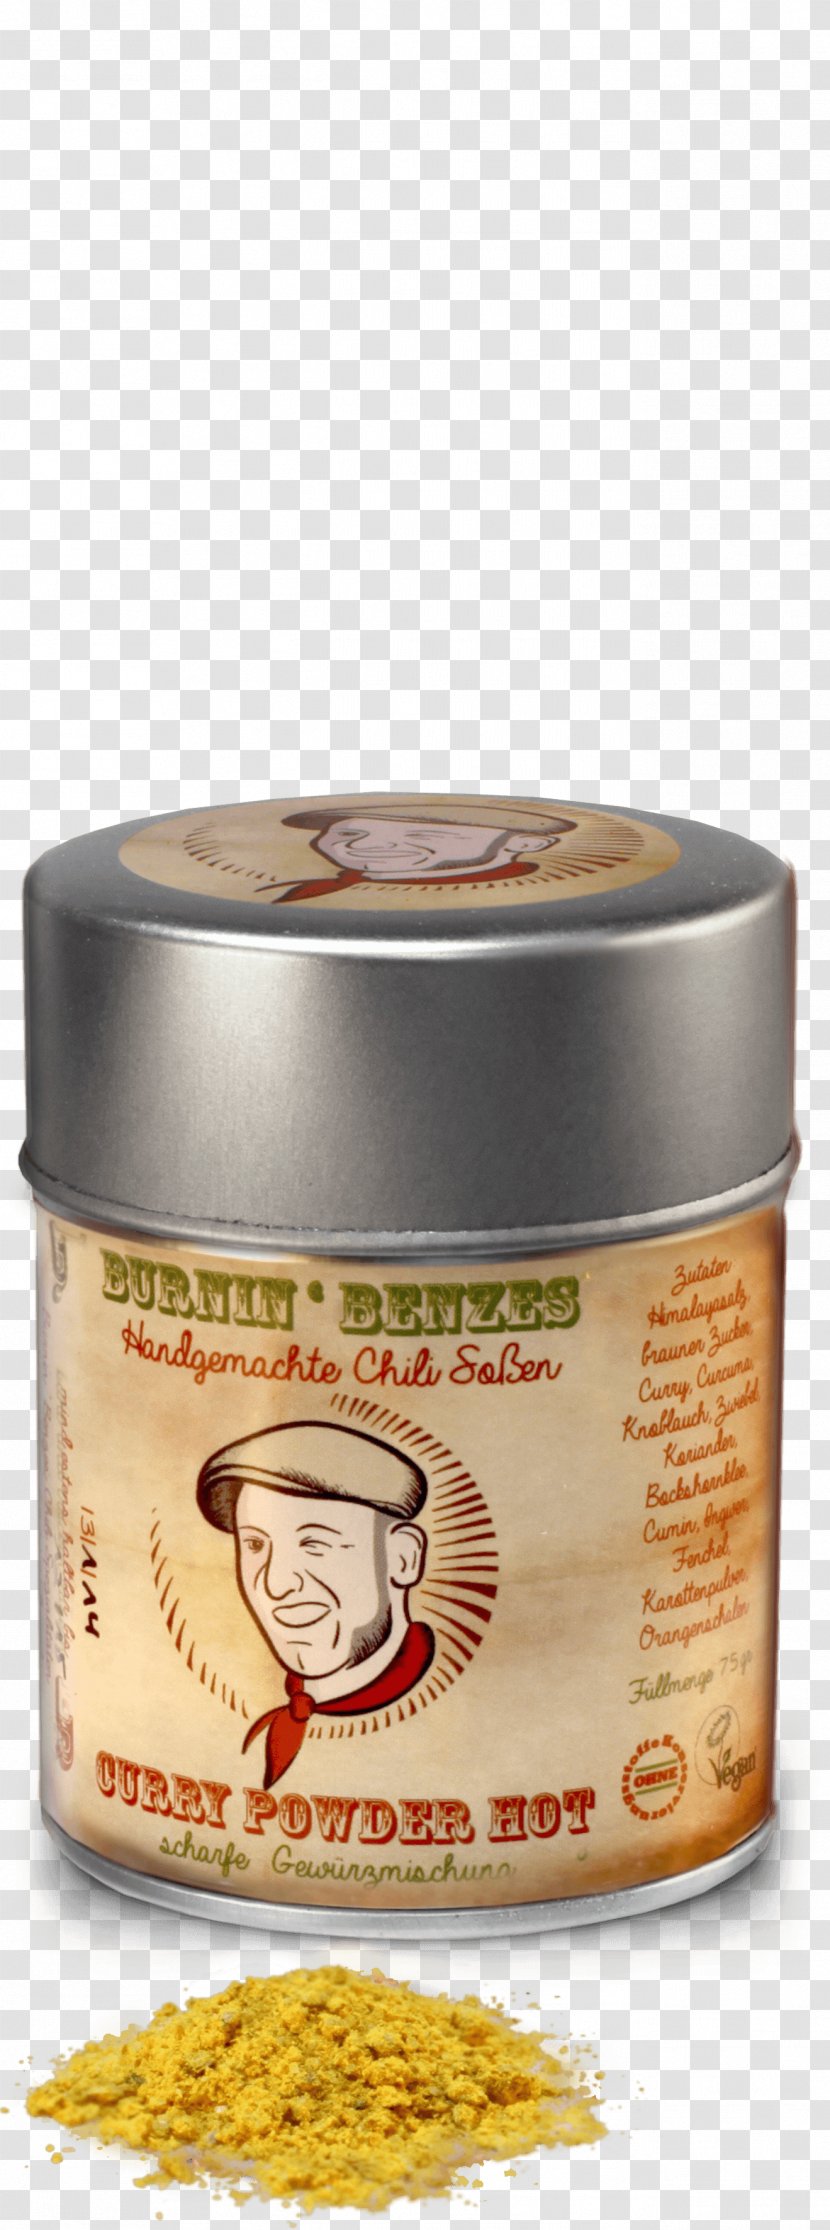 Keyword Tool Pungency Jamaican Jerk Spice Clip Art - Chili Powder Transparent PNG